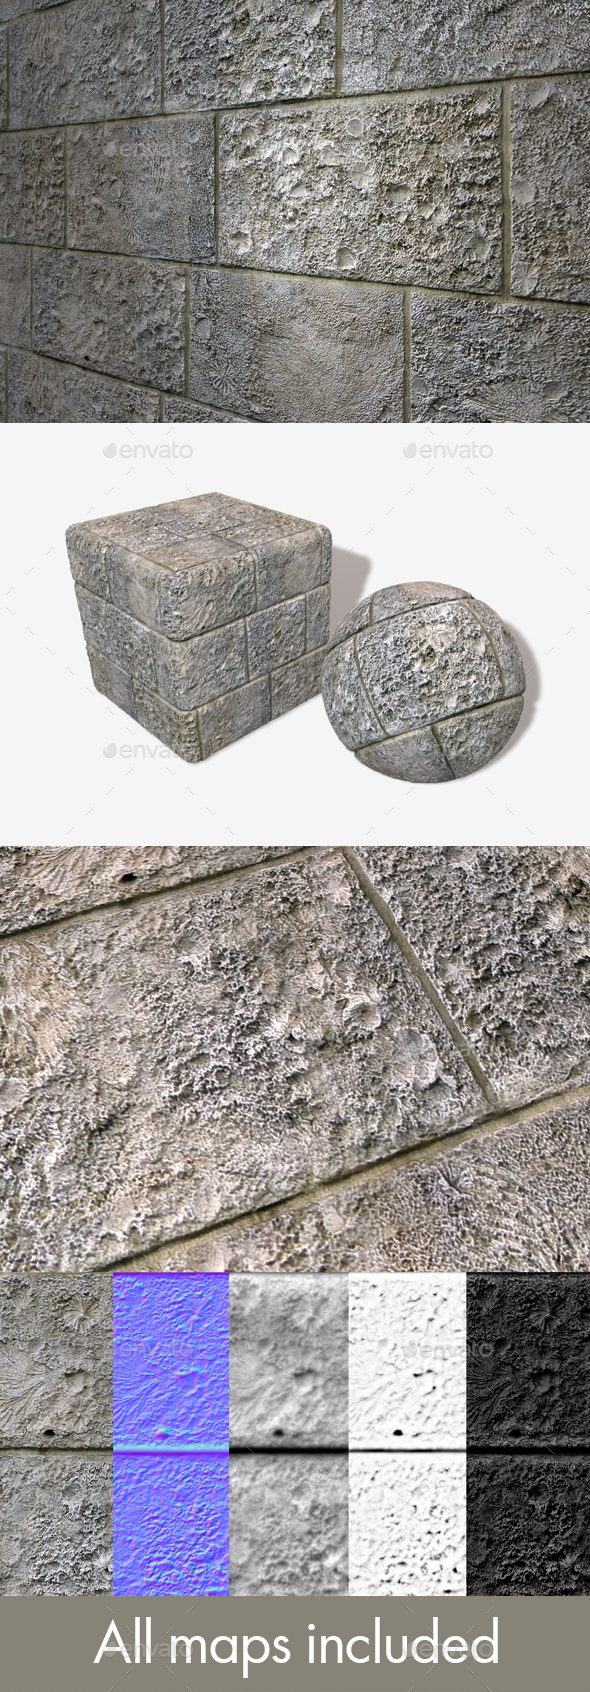 Fossil Printed Bricks - 3Docean 16636571